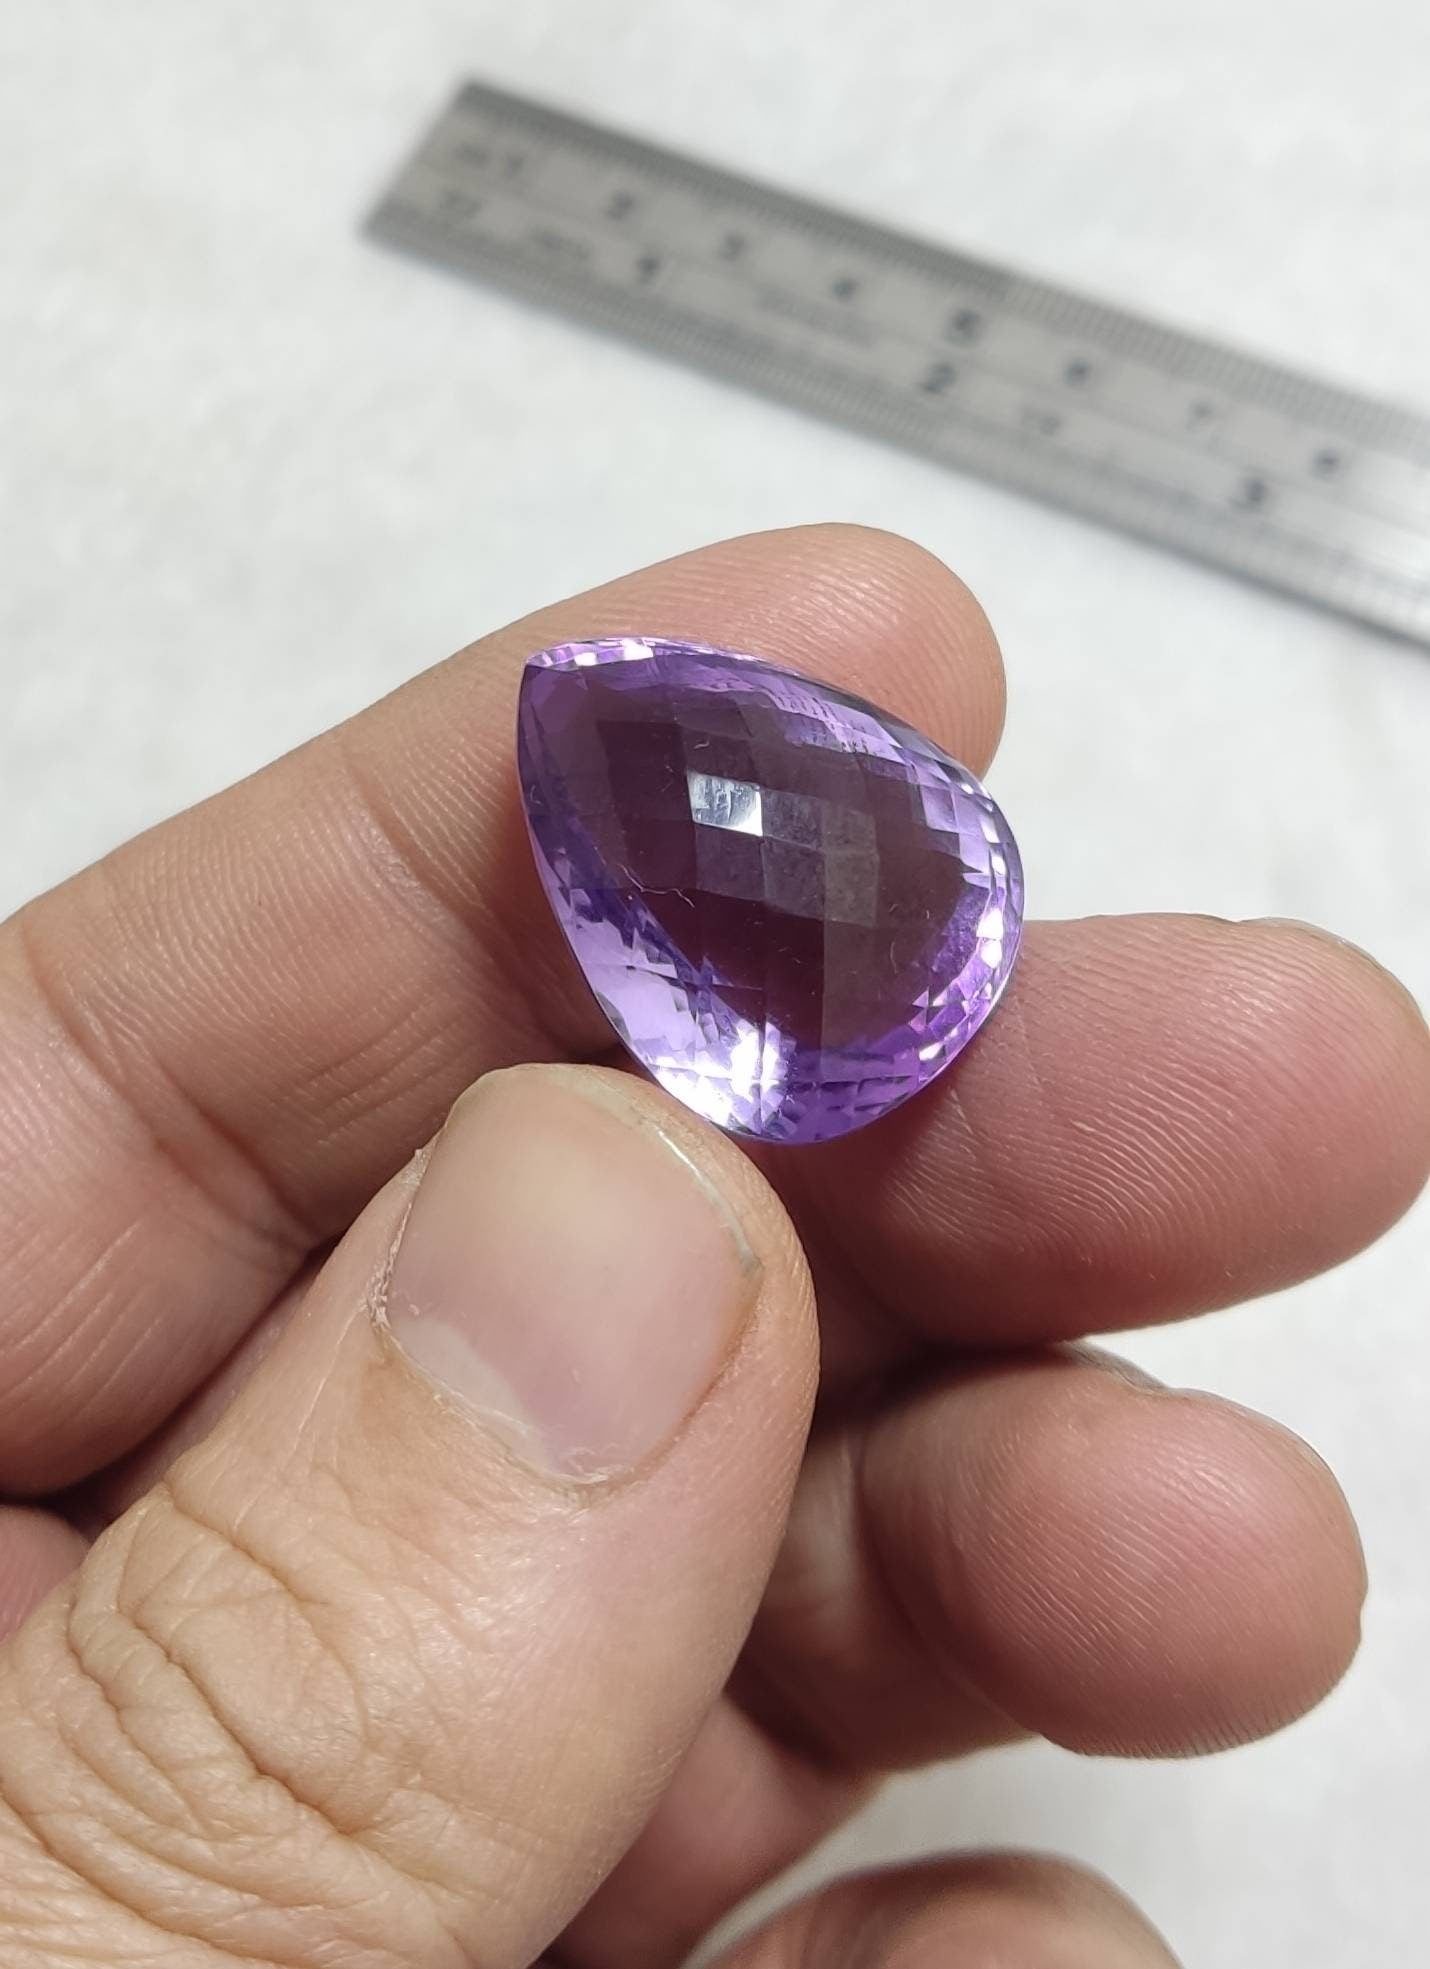 Tear drop cut faceted amethyst gemstone 40 carats